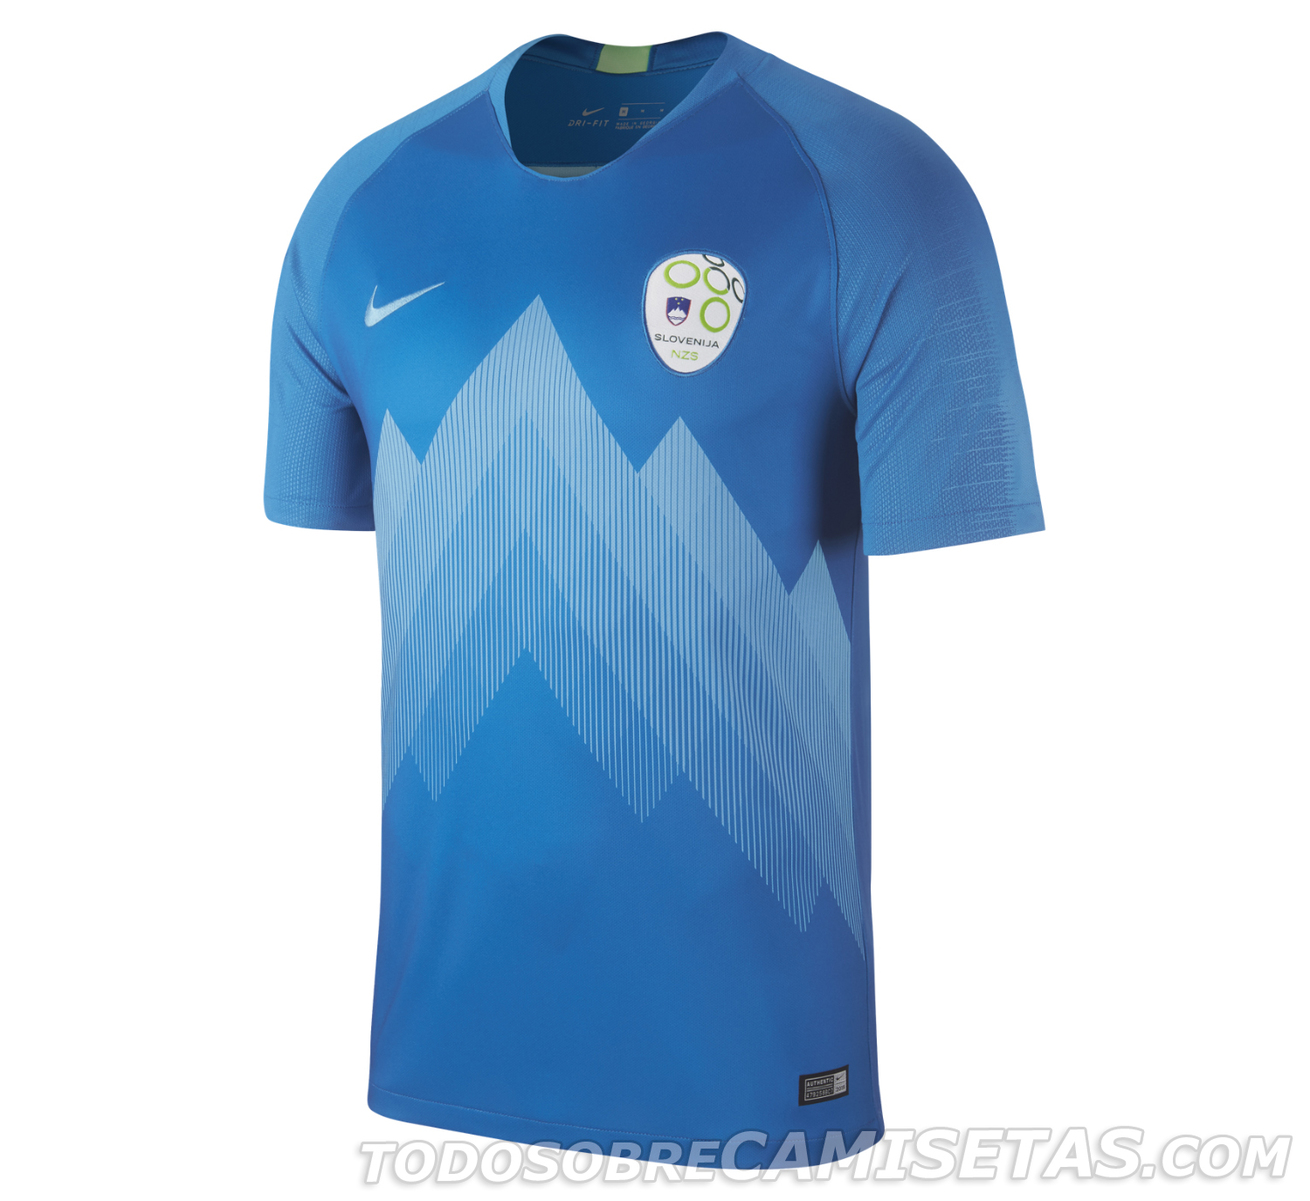 Slovenia 2018 Nike Kits